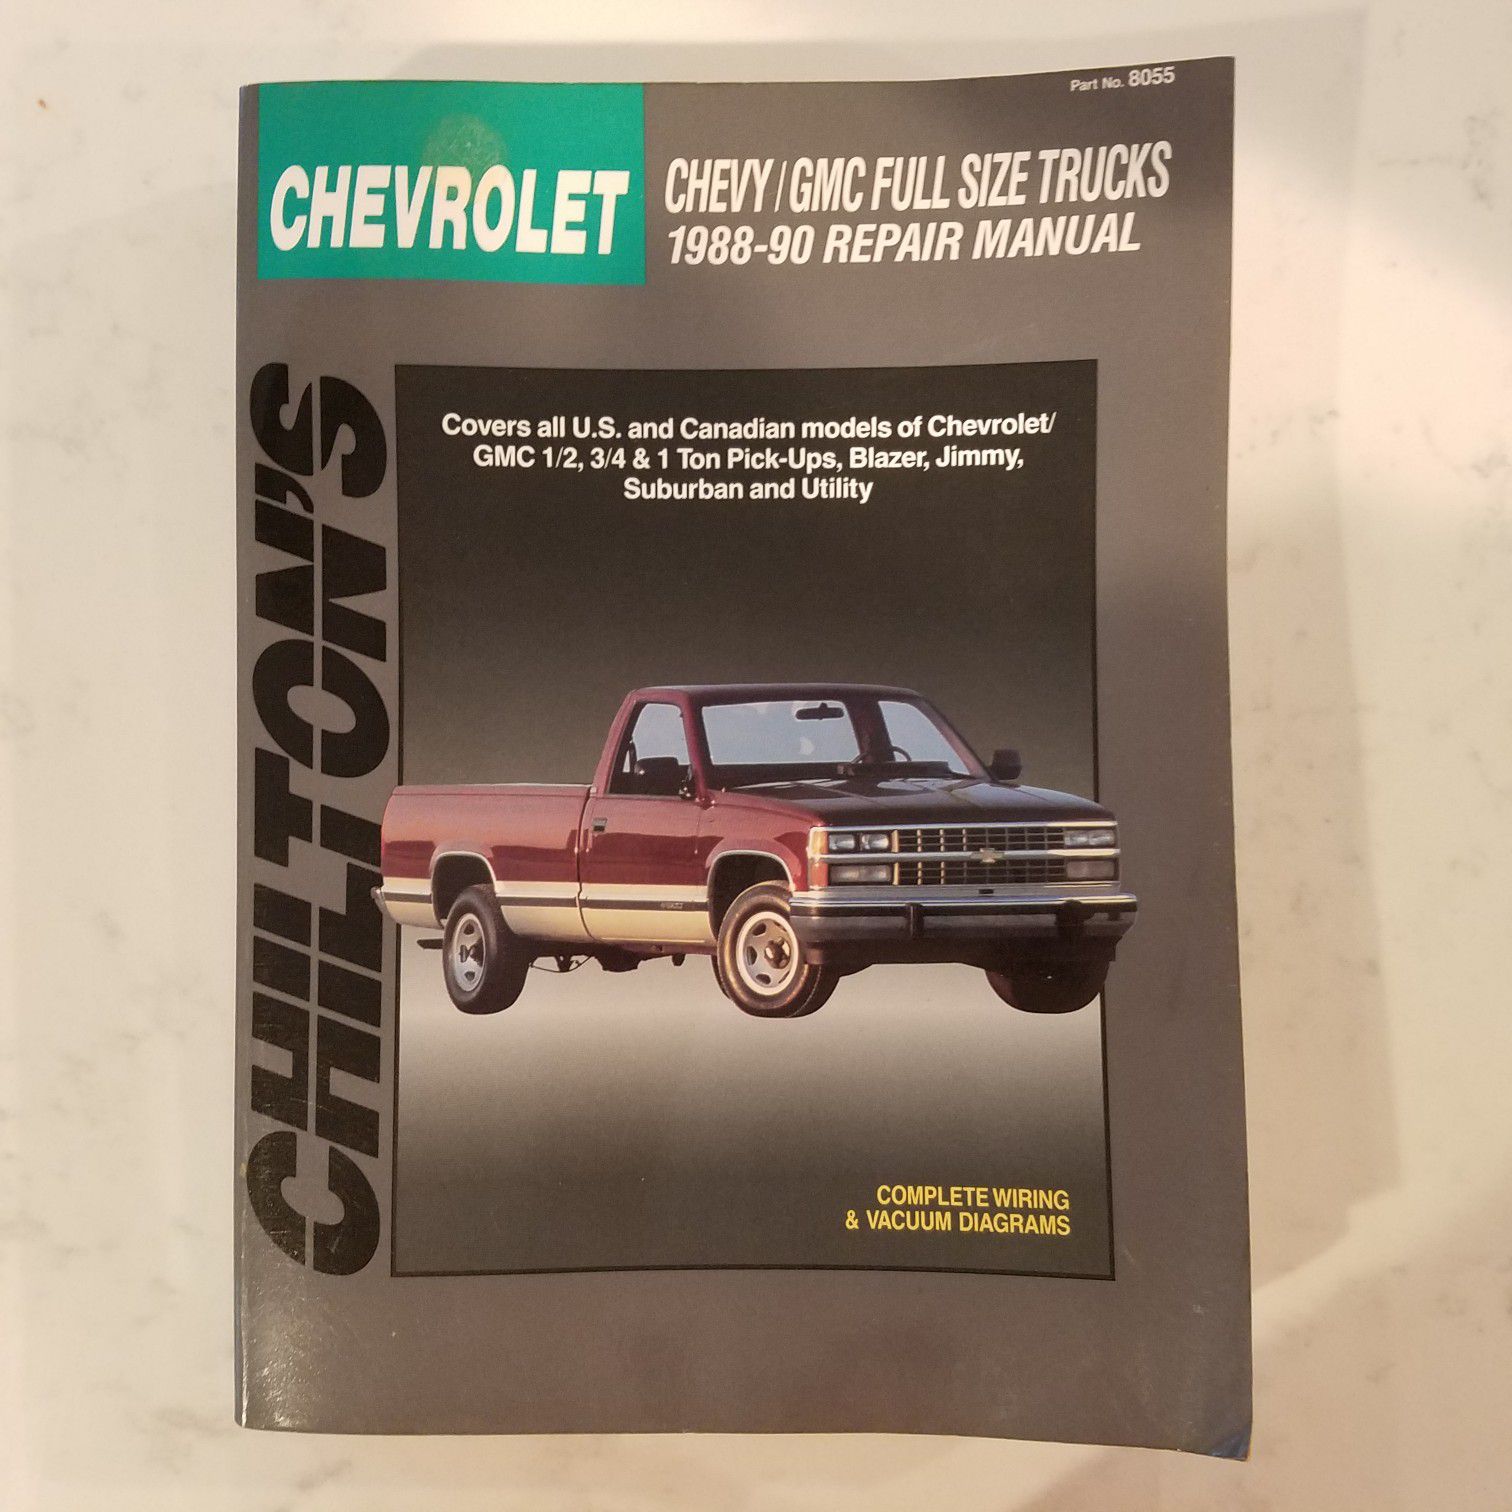 Chilton's General Motors 8055 Chevy and GMC Full size Trucks 1988-90 Repair Manual